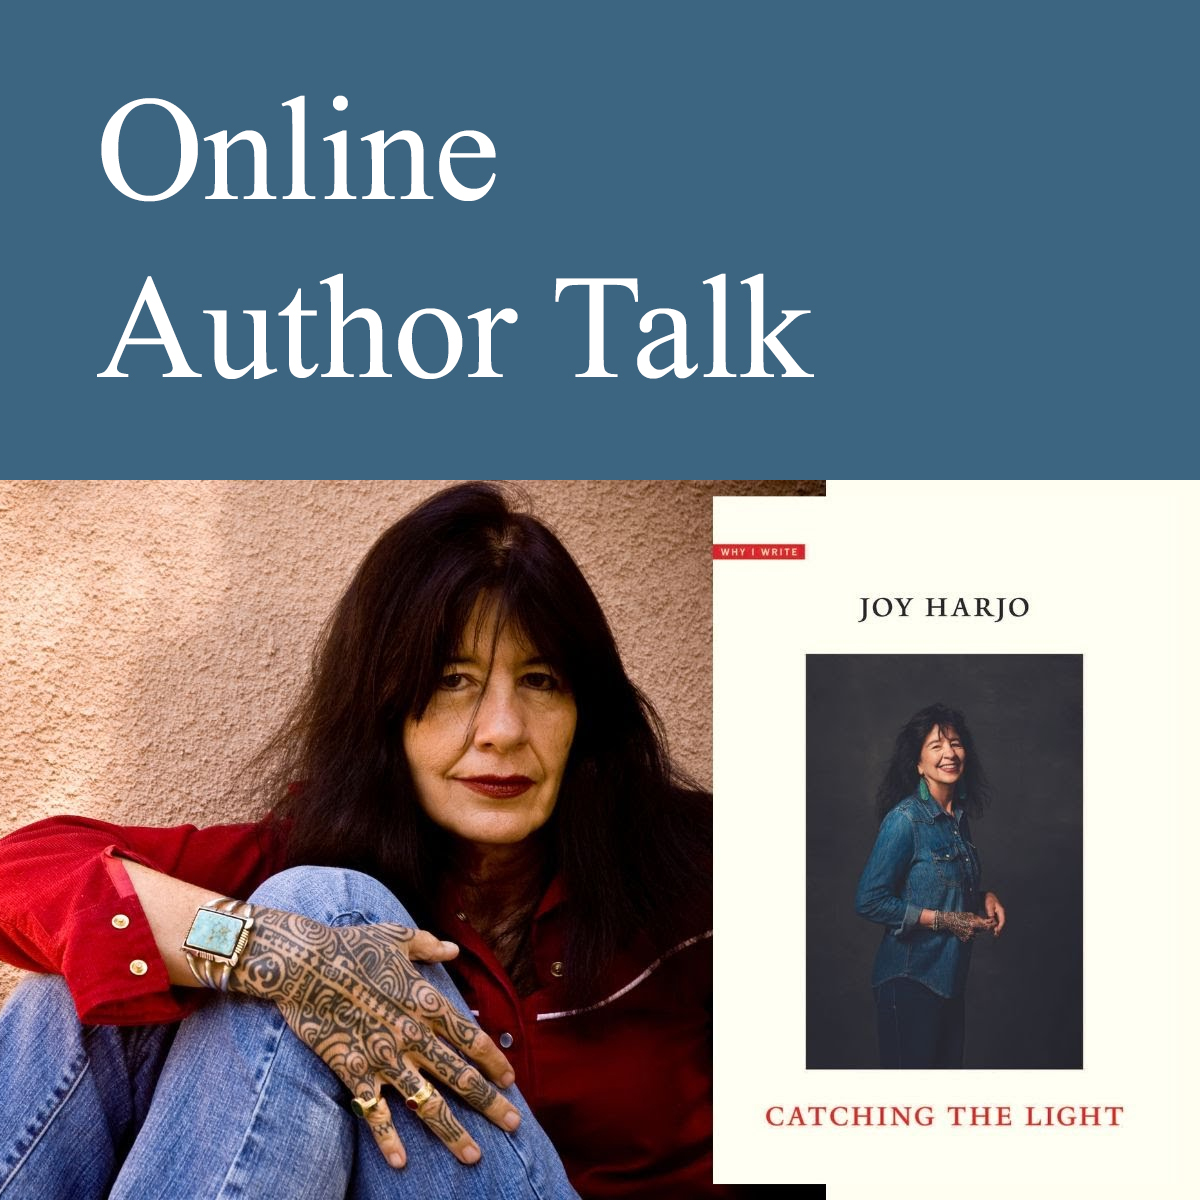 Online Author Talk: Joy Harjo